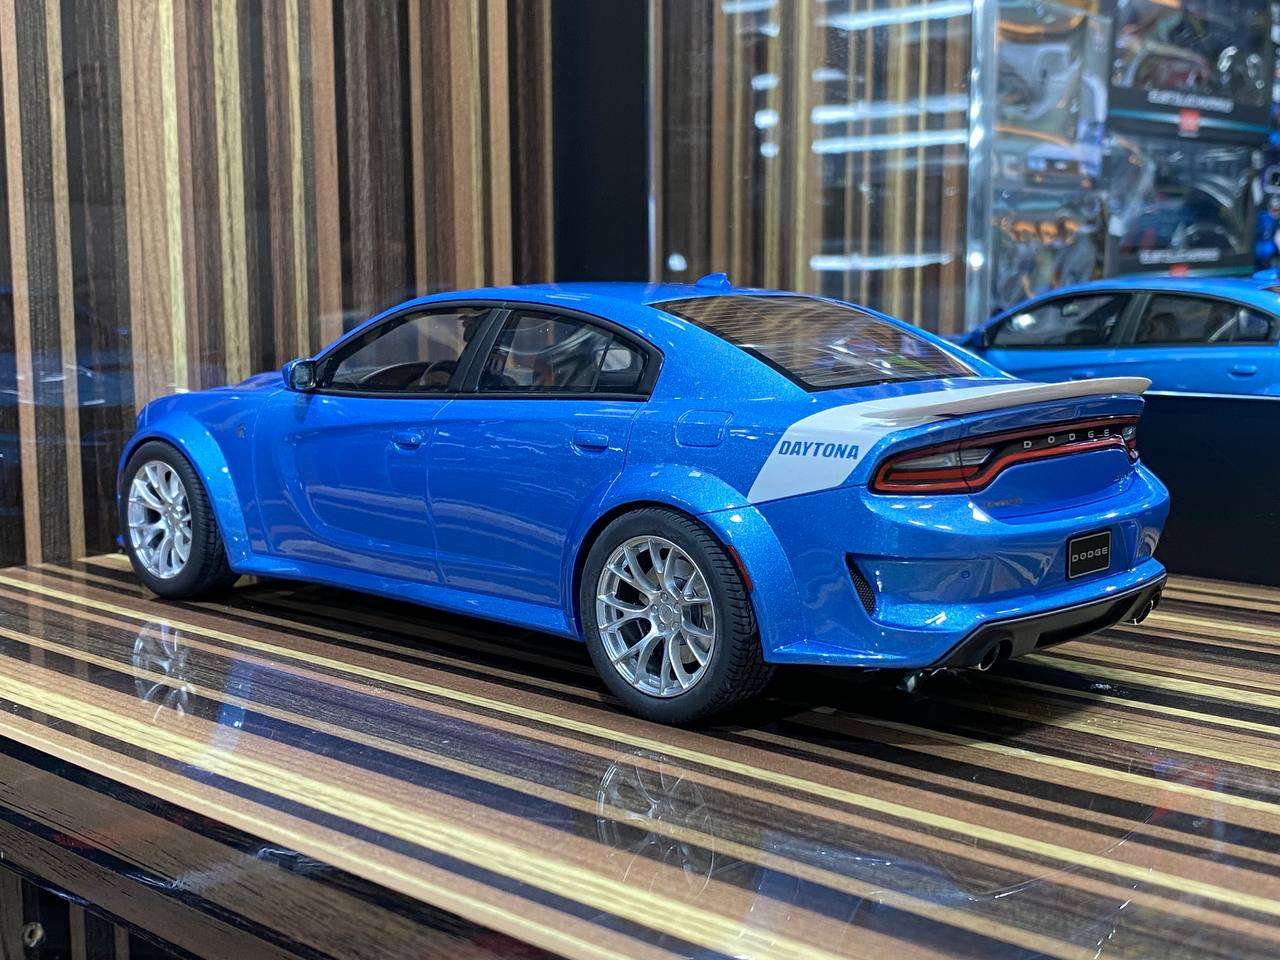 1/18 Diecast Dodge Charger SRT Hellcat GT Spirit Scale Model Car|Sold in Dturman.com Dubai UAE.